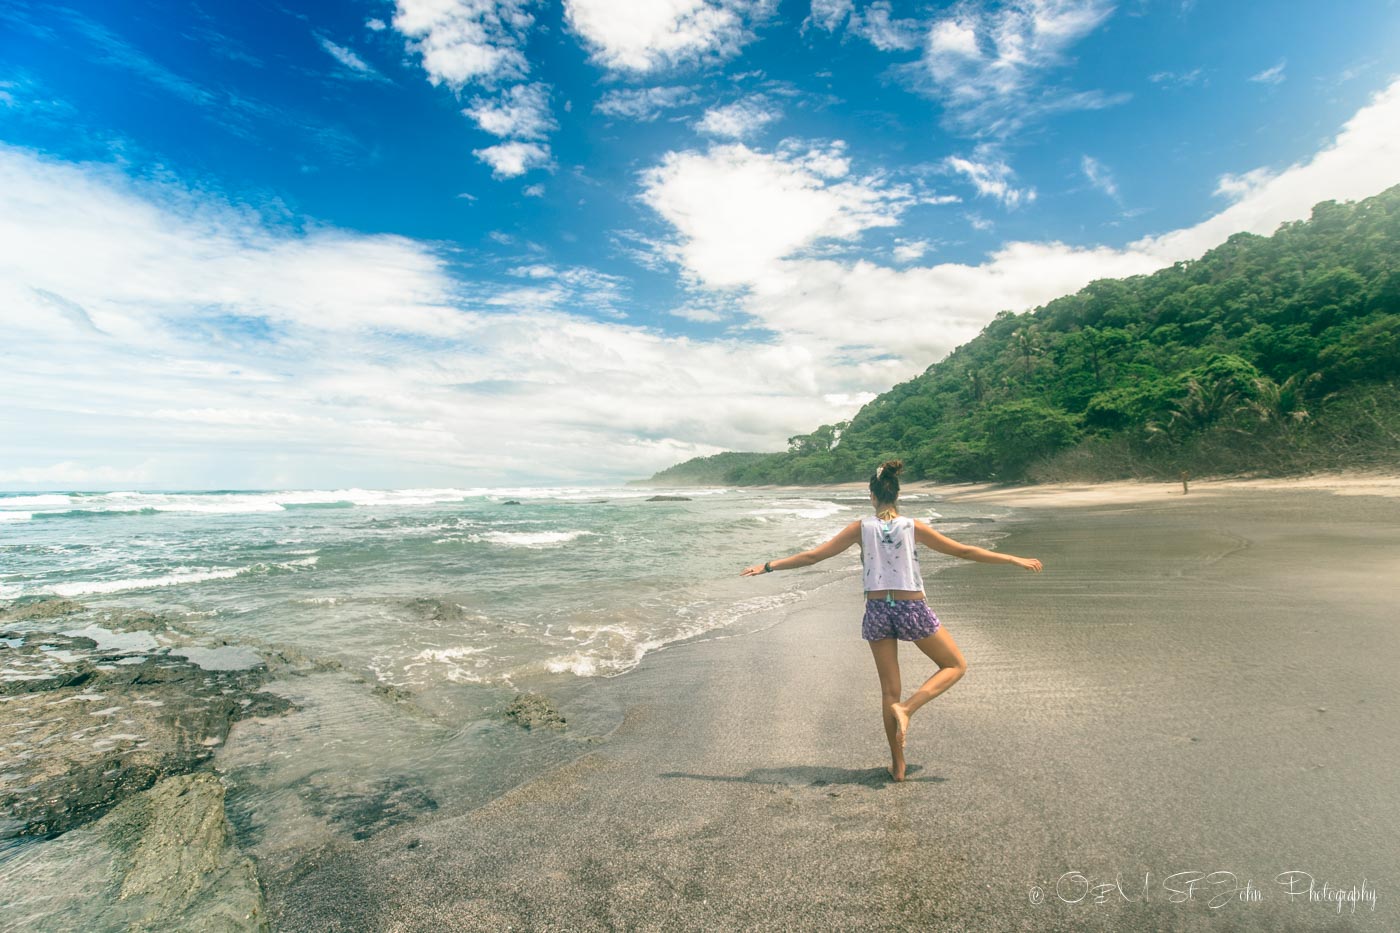 Oksana on the beach at Santa Teresa, Costa Rica